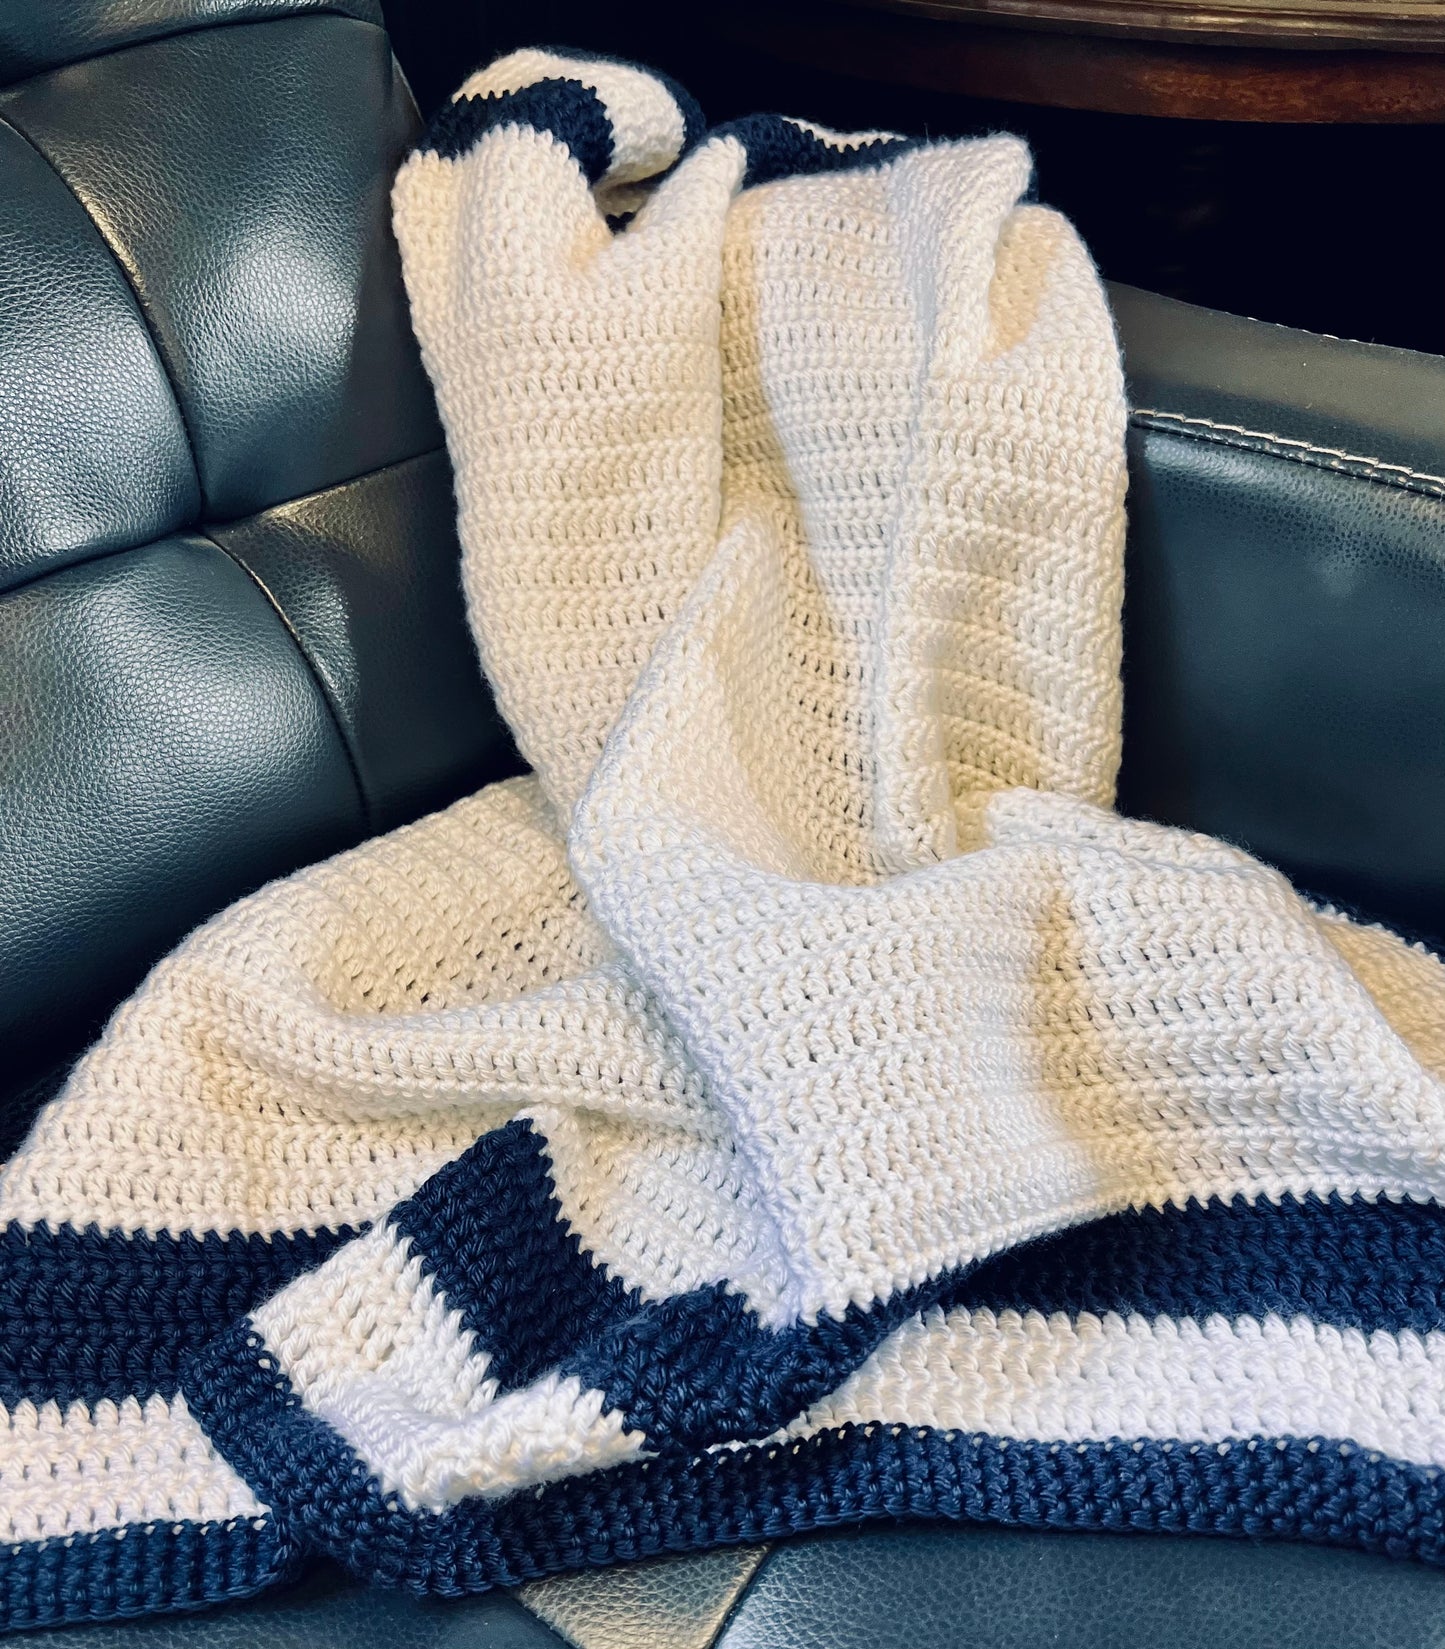 Handmade Crochet Baby Blanket, Snow White and Navy